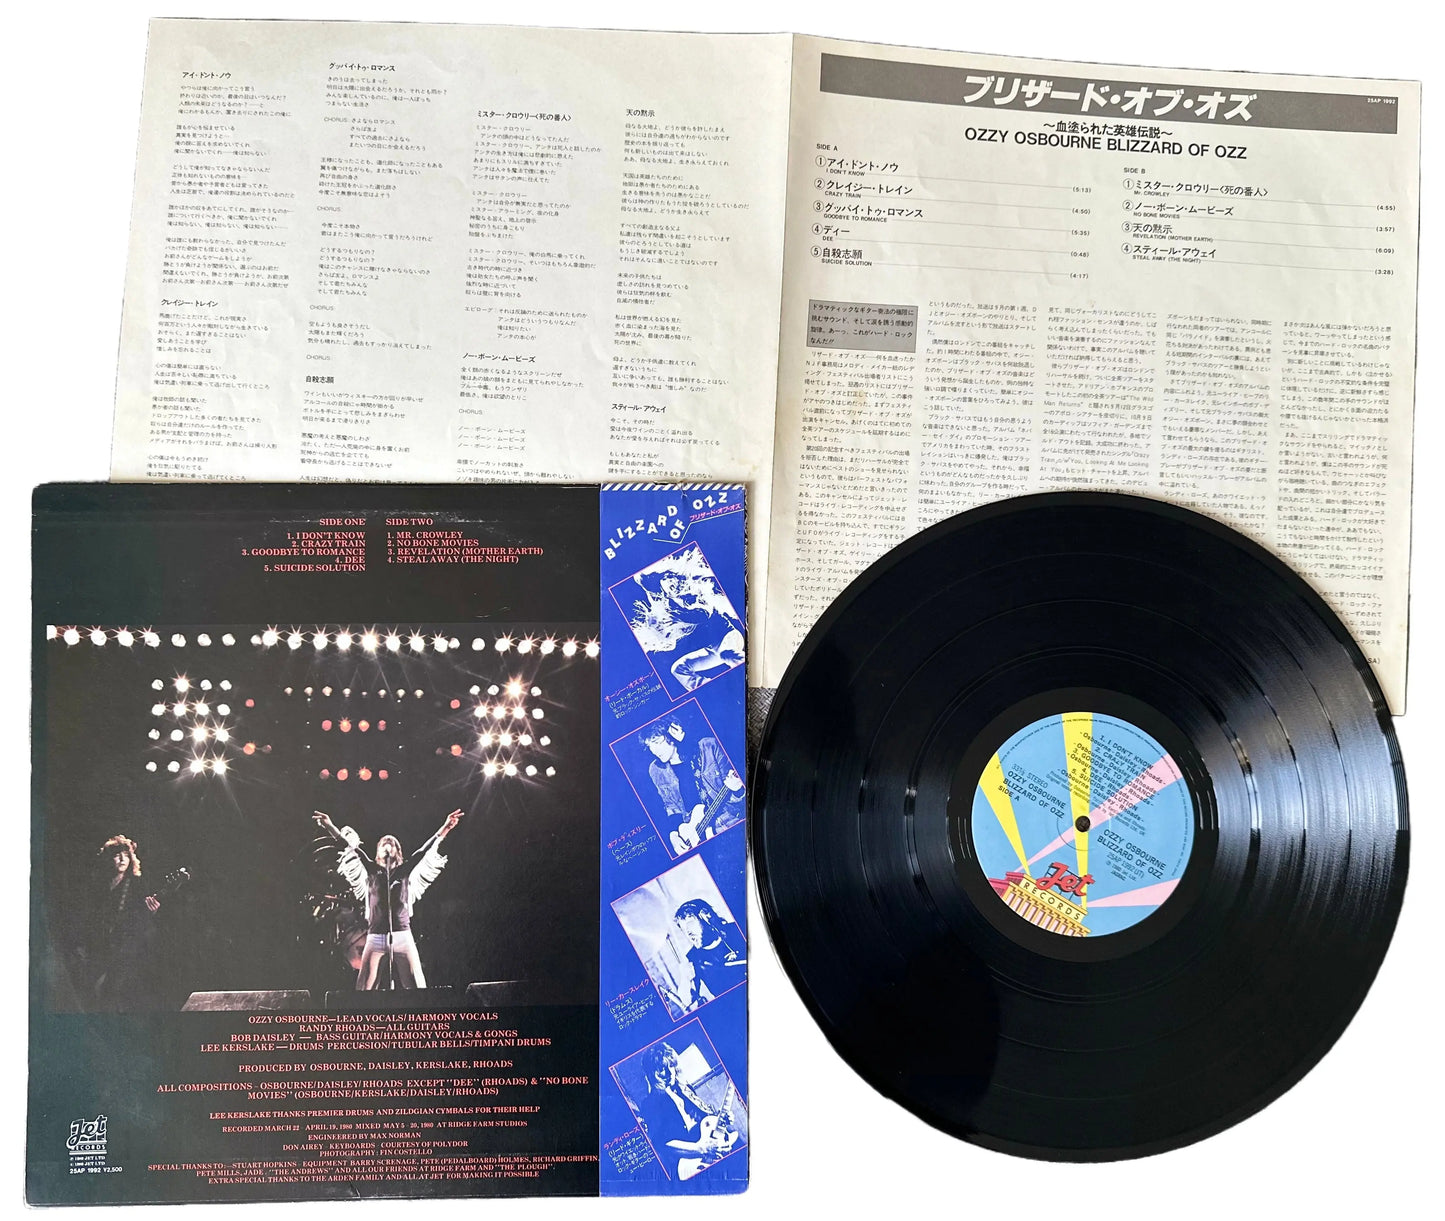 Ozzy Osbourne - Blizzard of Ozz [Original Japanese Vinyl LP Pressing]